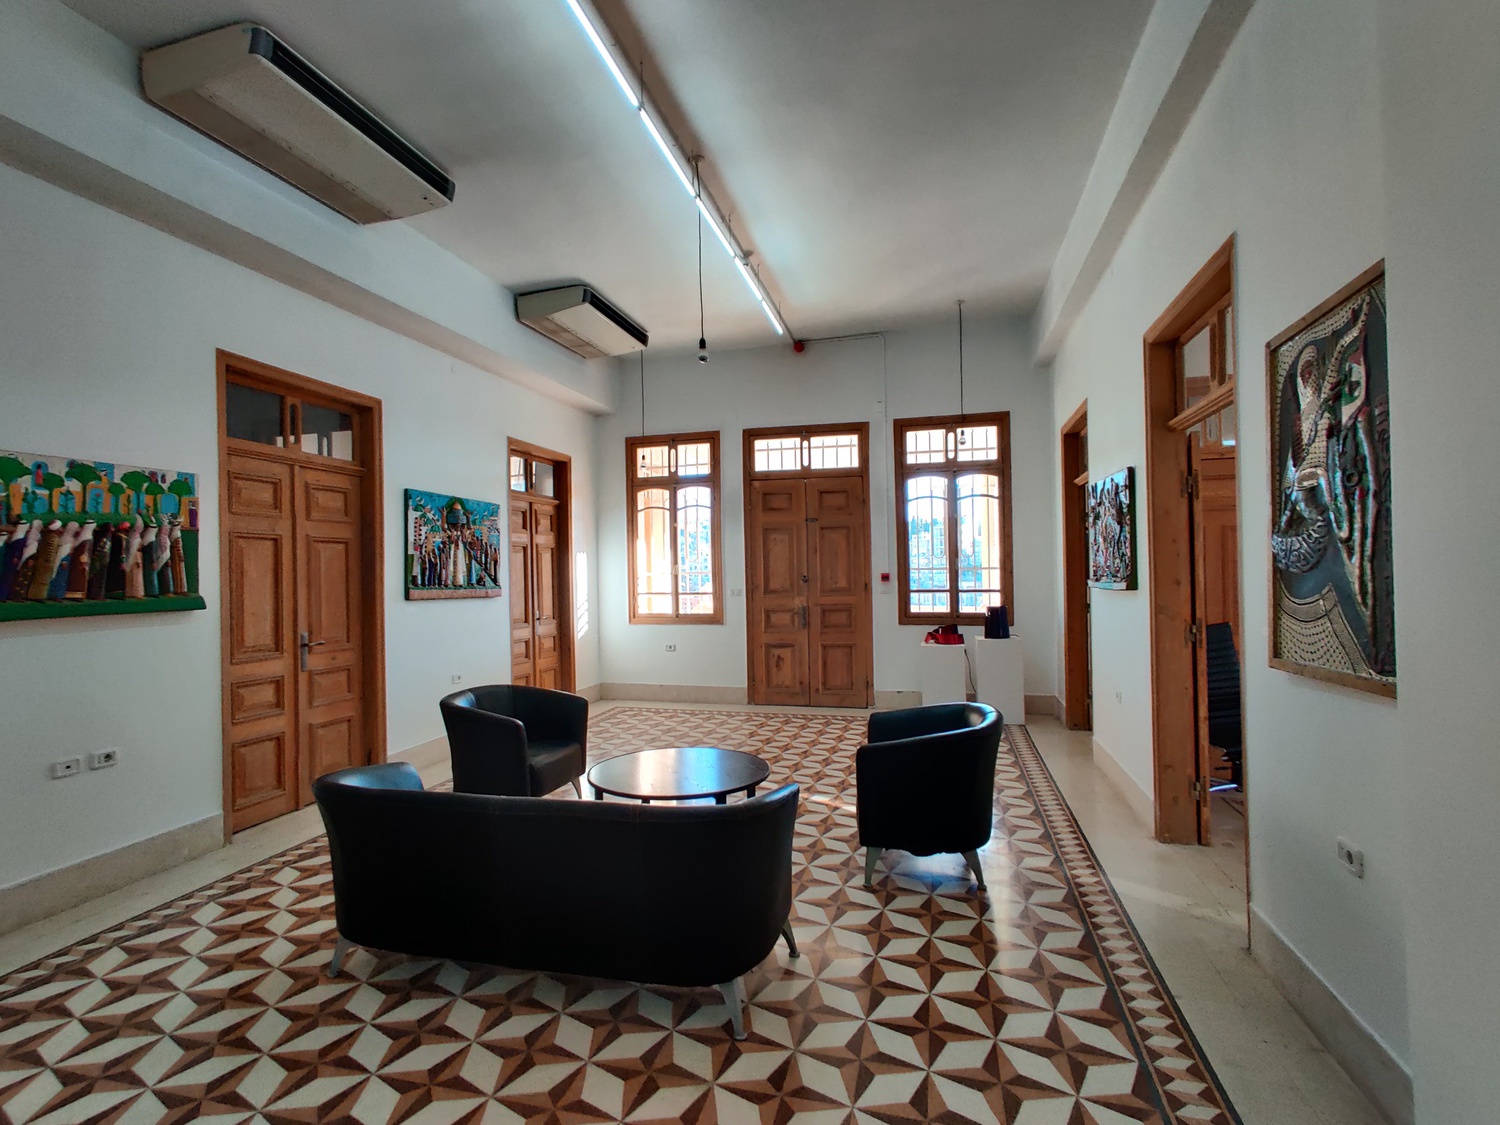 Darat al Funun - Interior view of the with furnishings and artwork